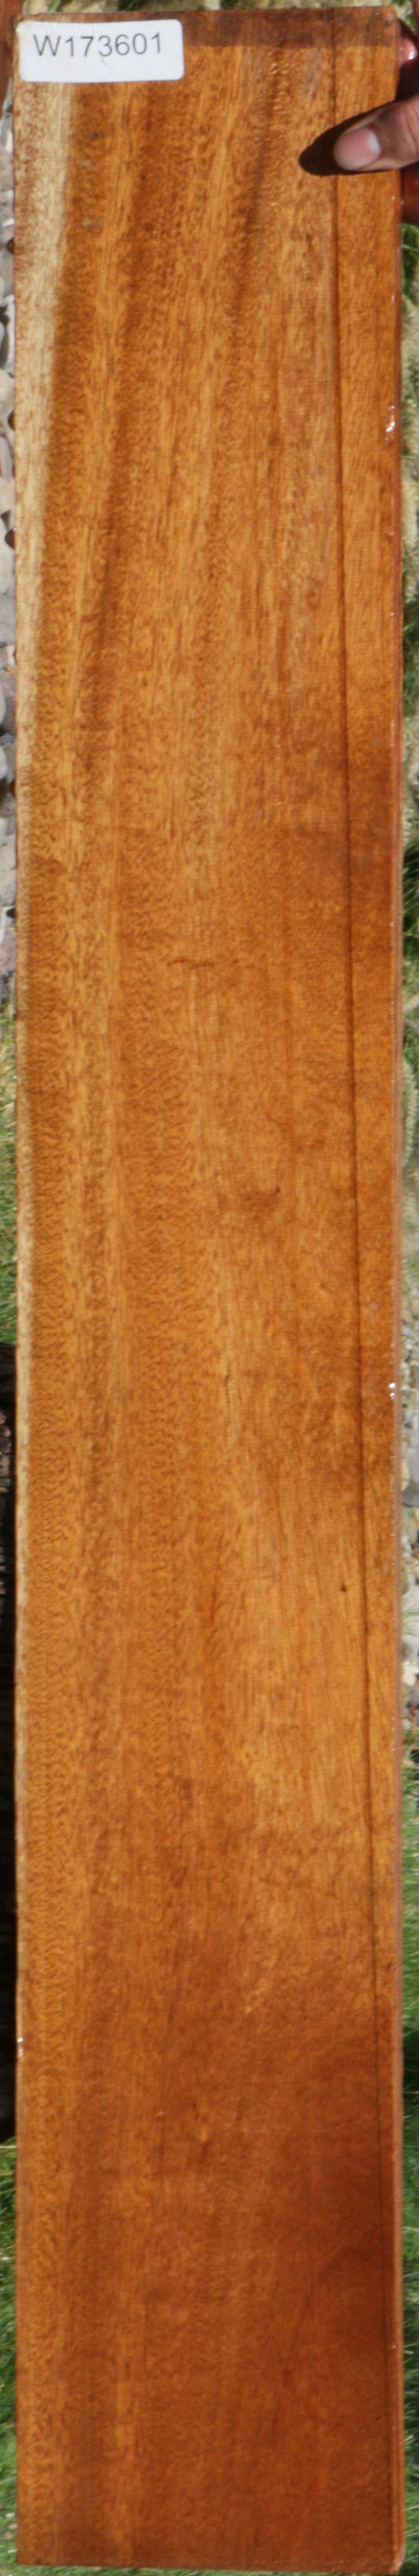 African Mahogany Lumber